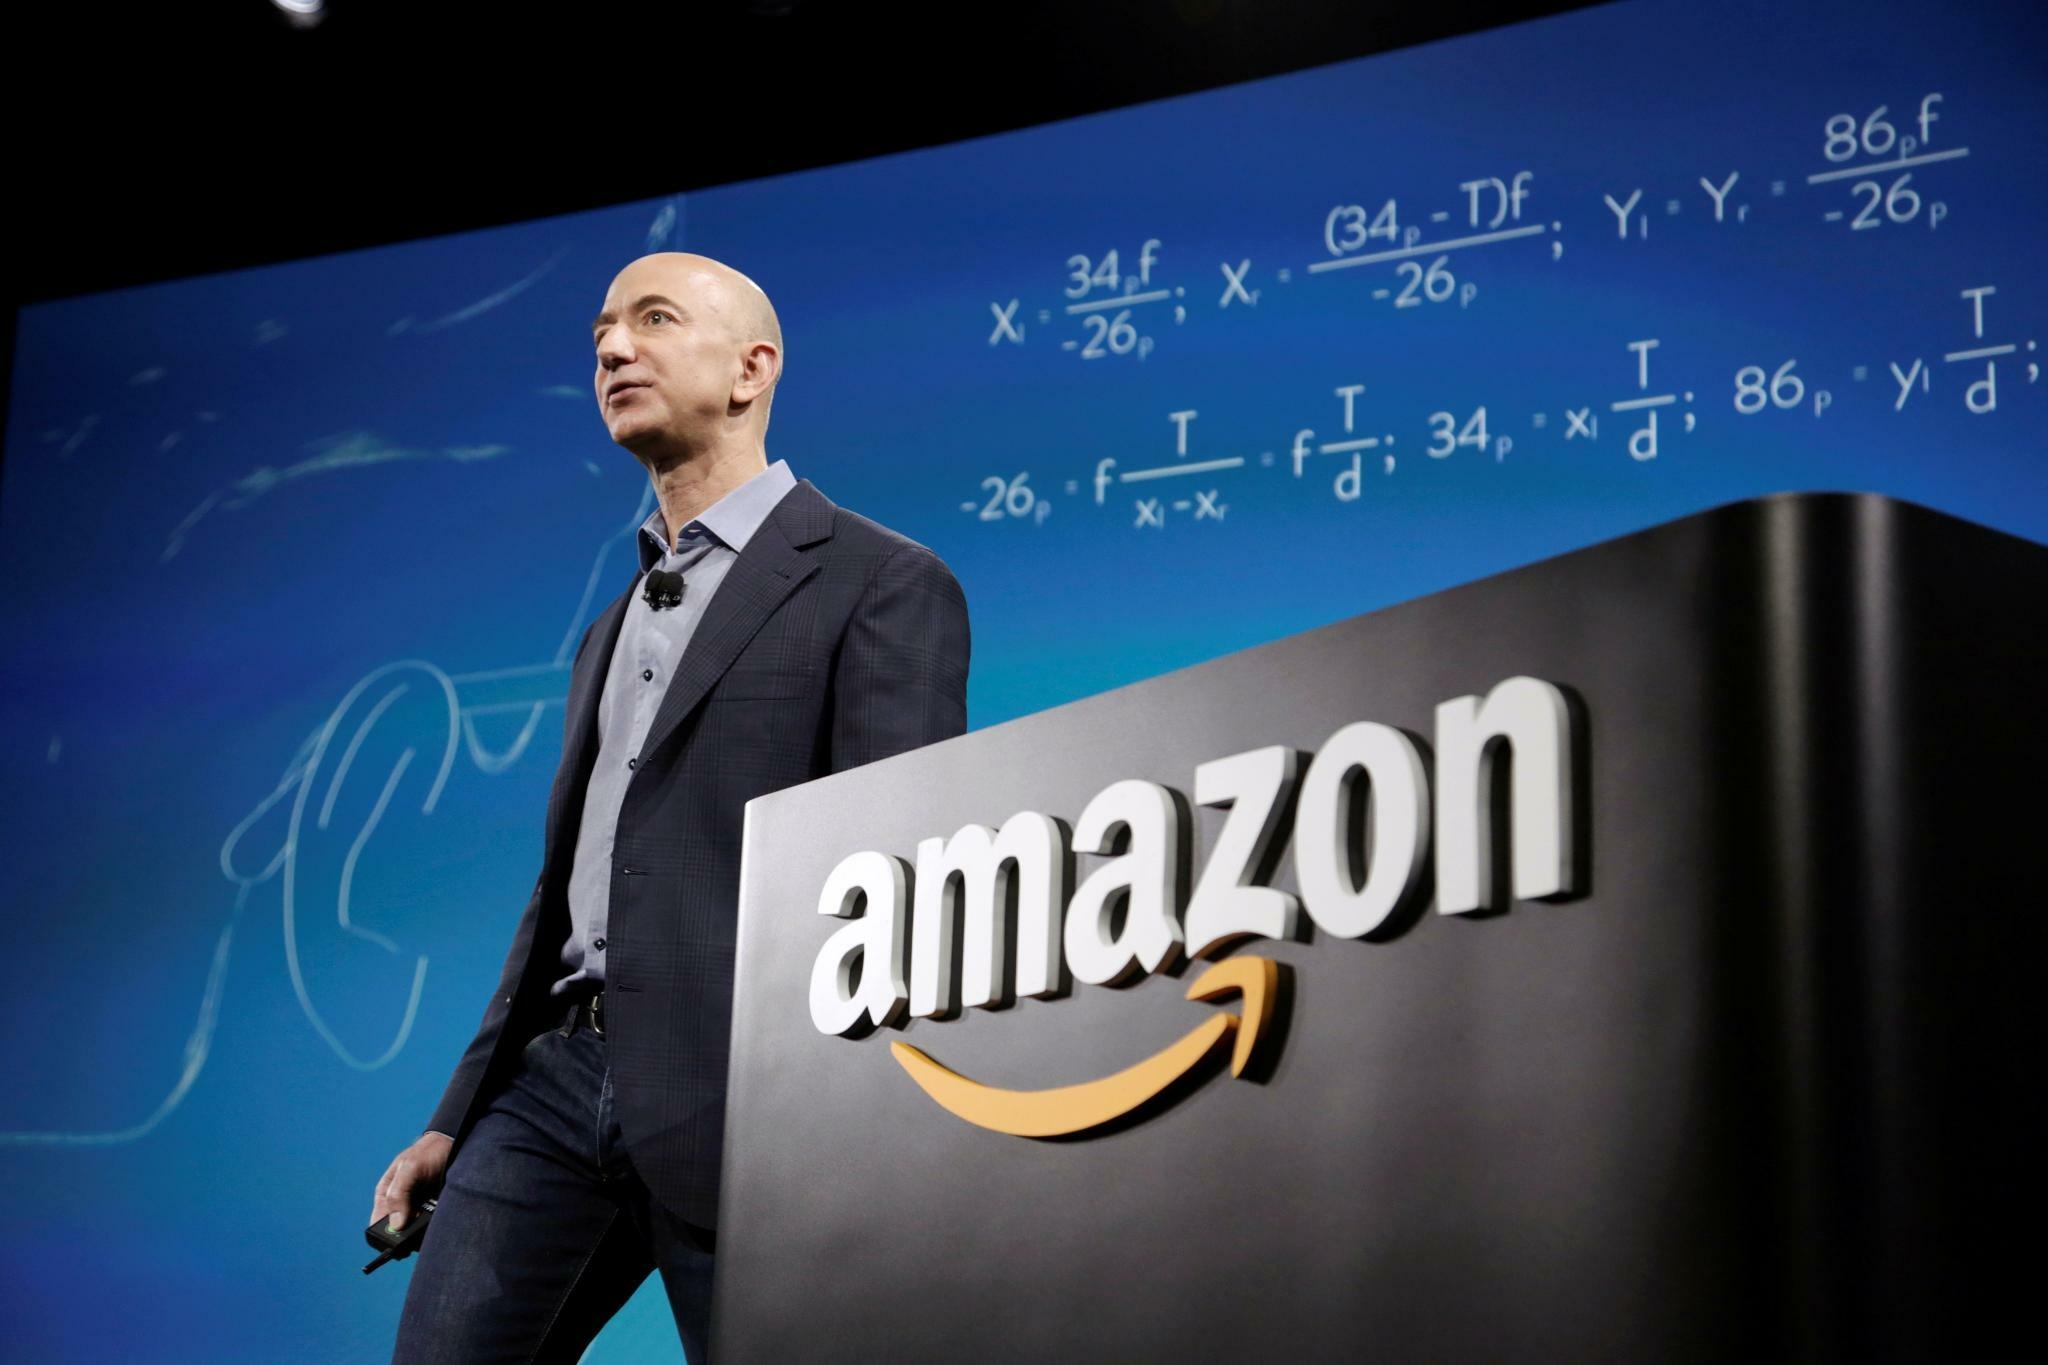 Amazon: An American internet technology company founded by Jeff Bezos. 2050x1370 HD Wallpaper.